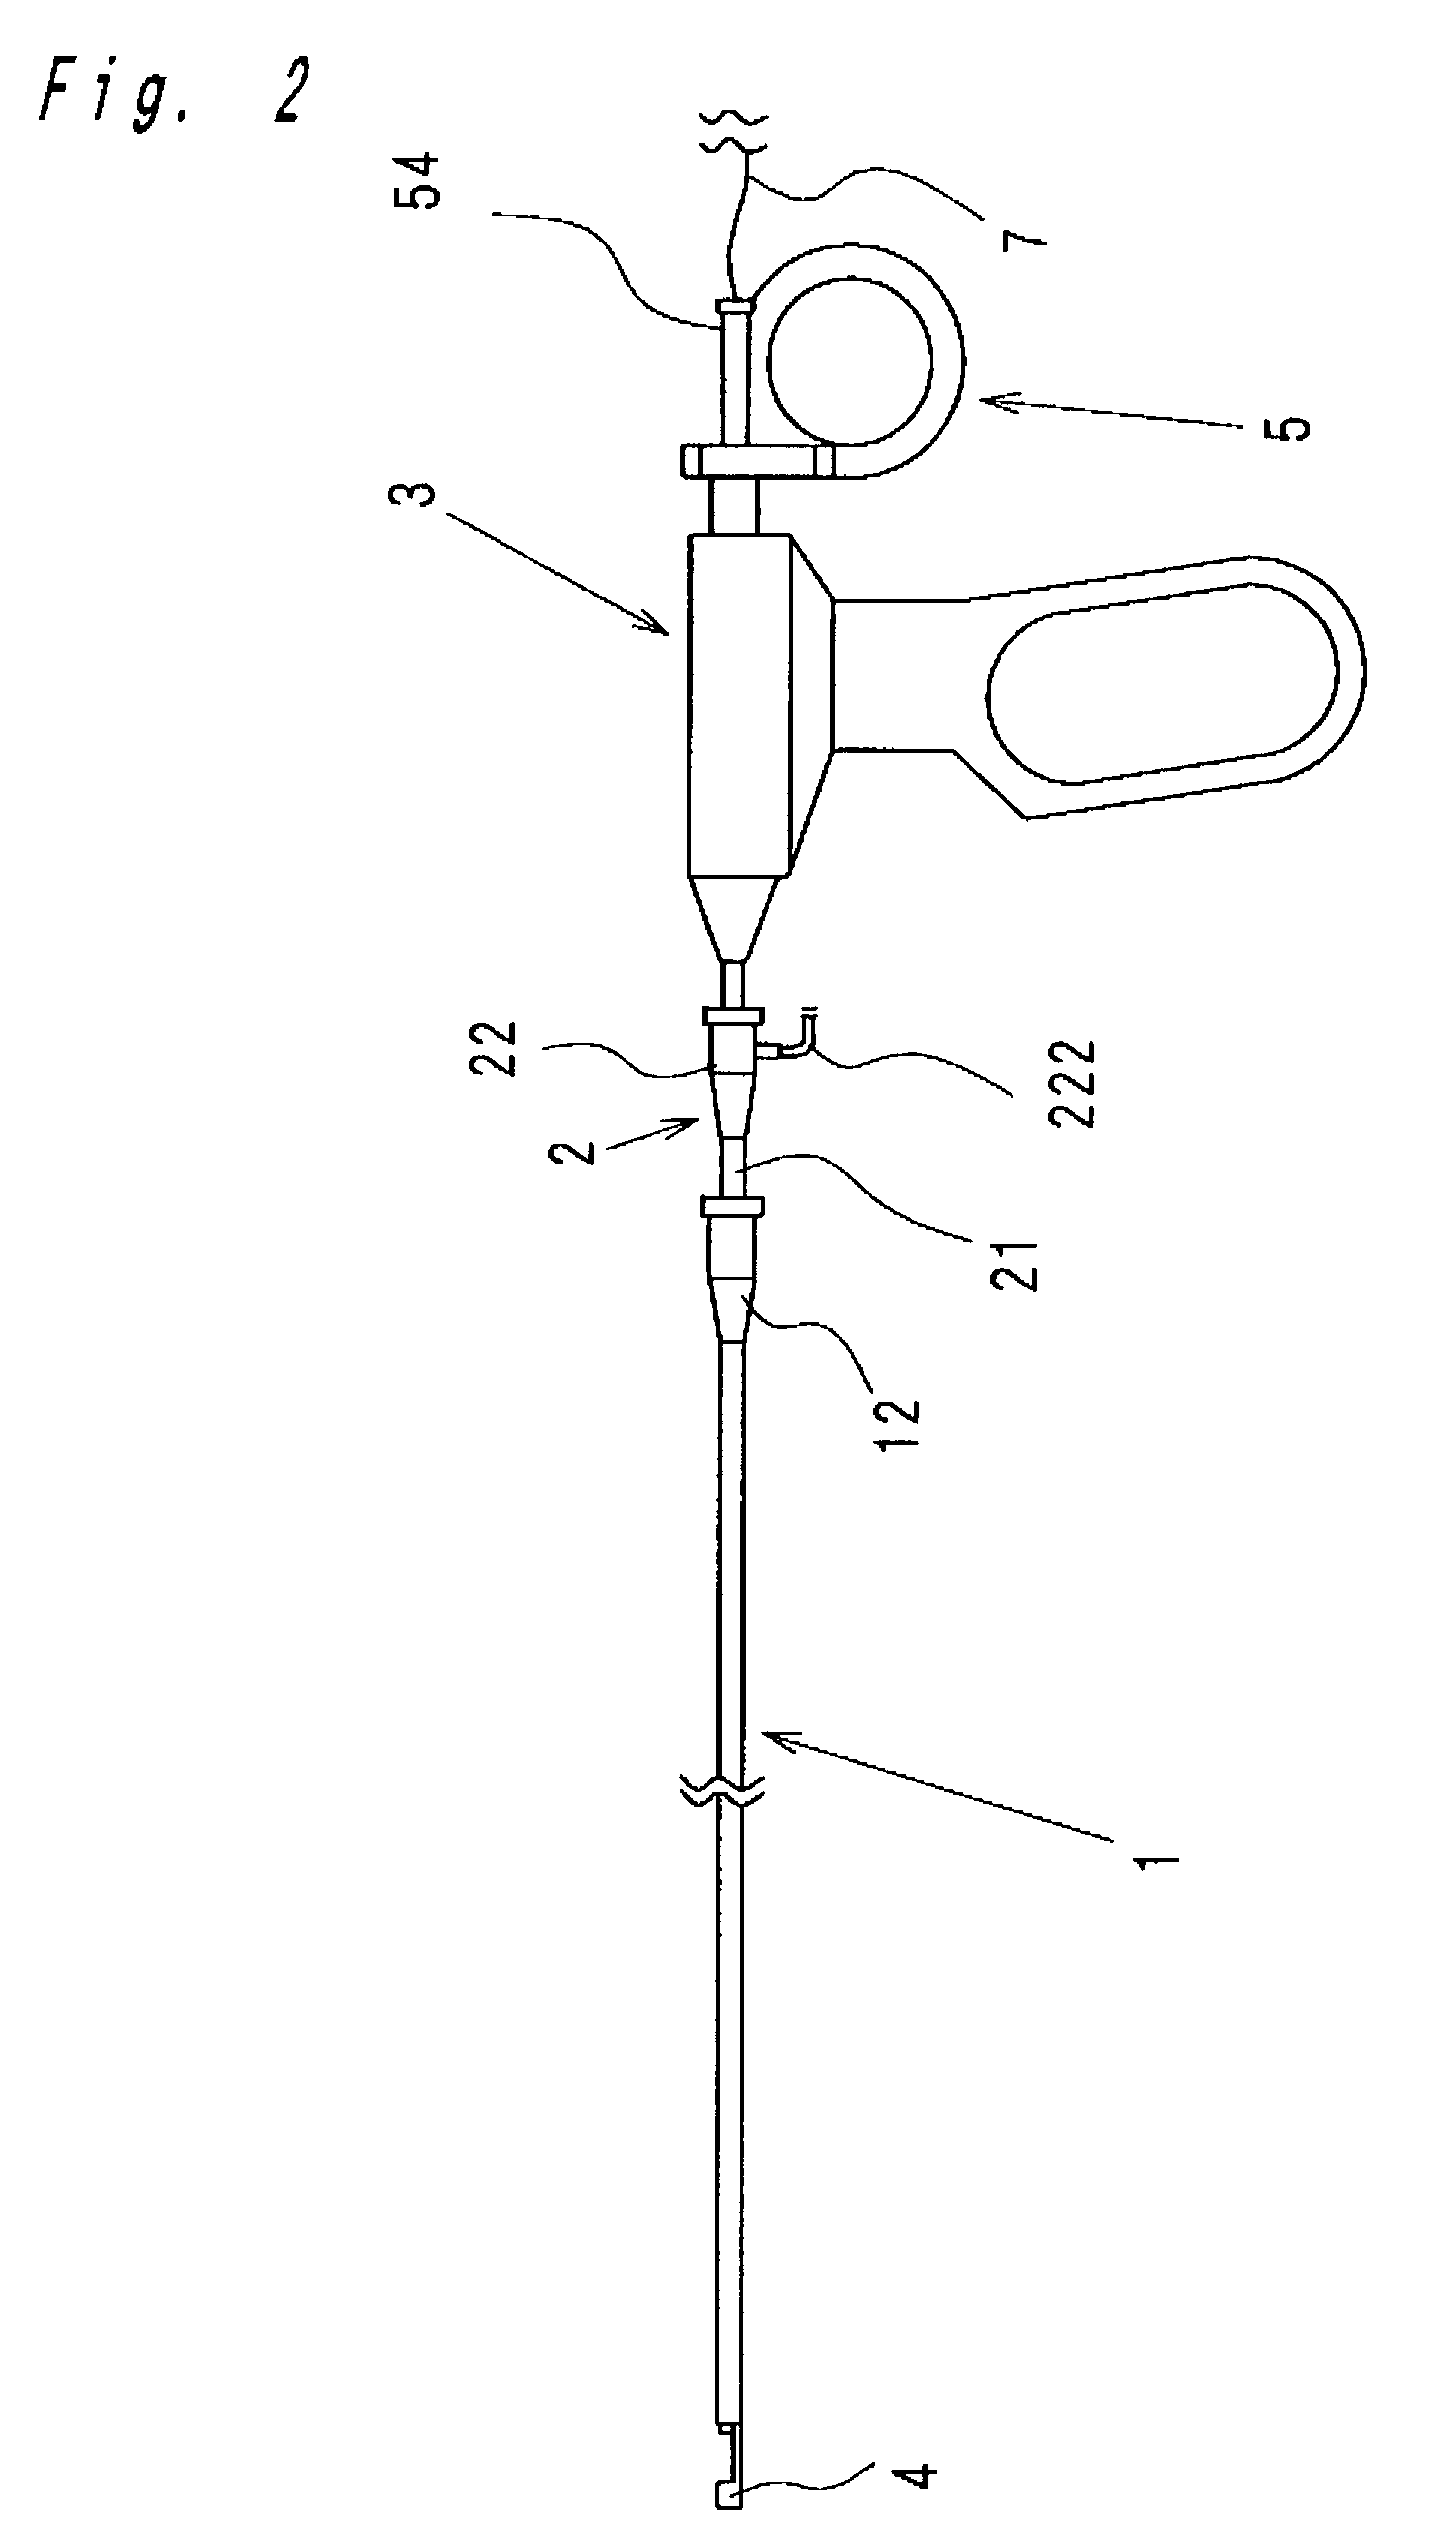 Intracardiac suture device